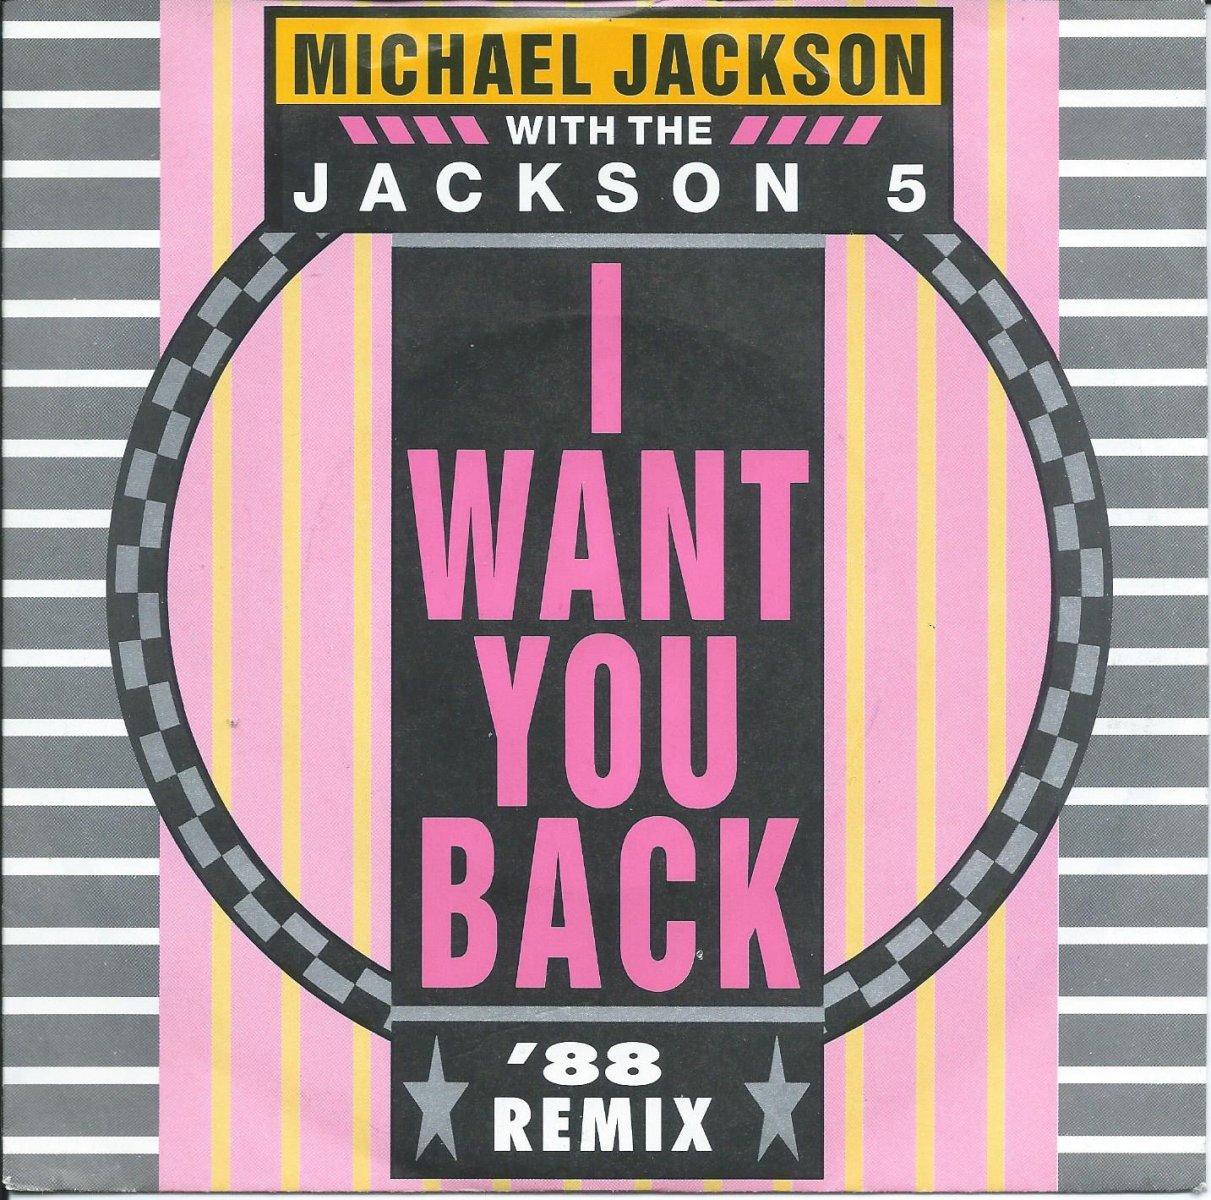 MICHAEL JACKSON WITH THE JACKSON 5 / I WANT YOU BACK '88 REMIX (7